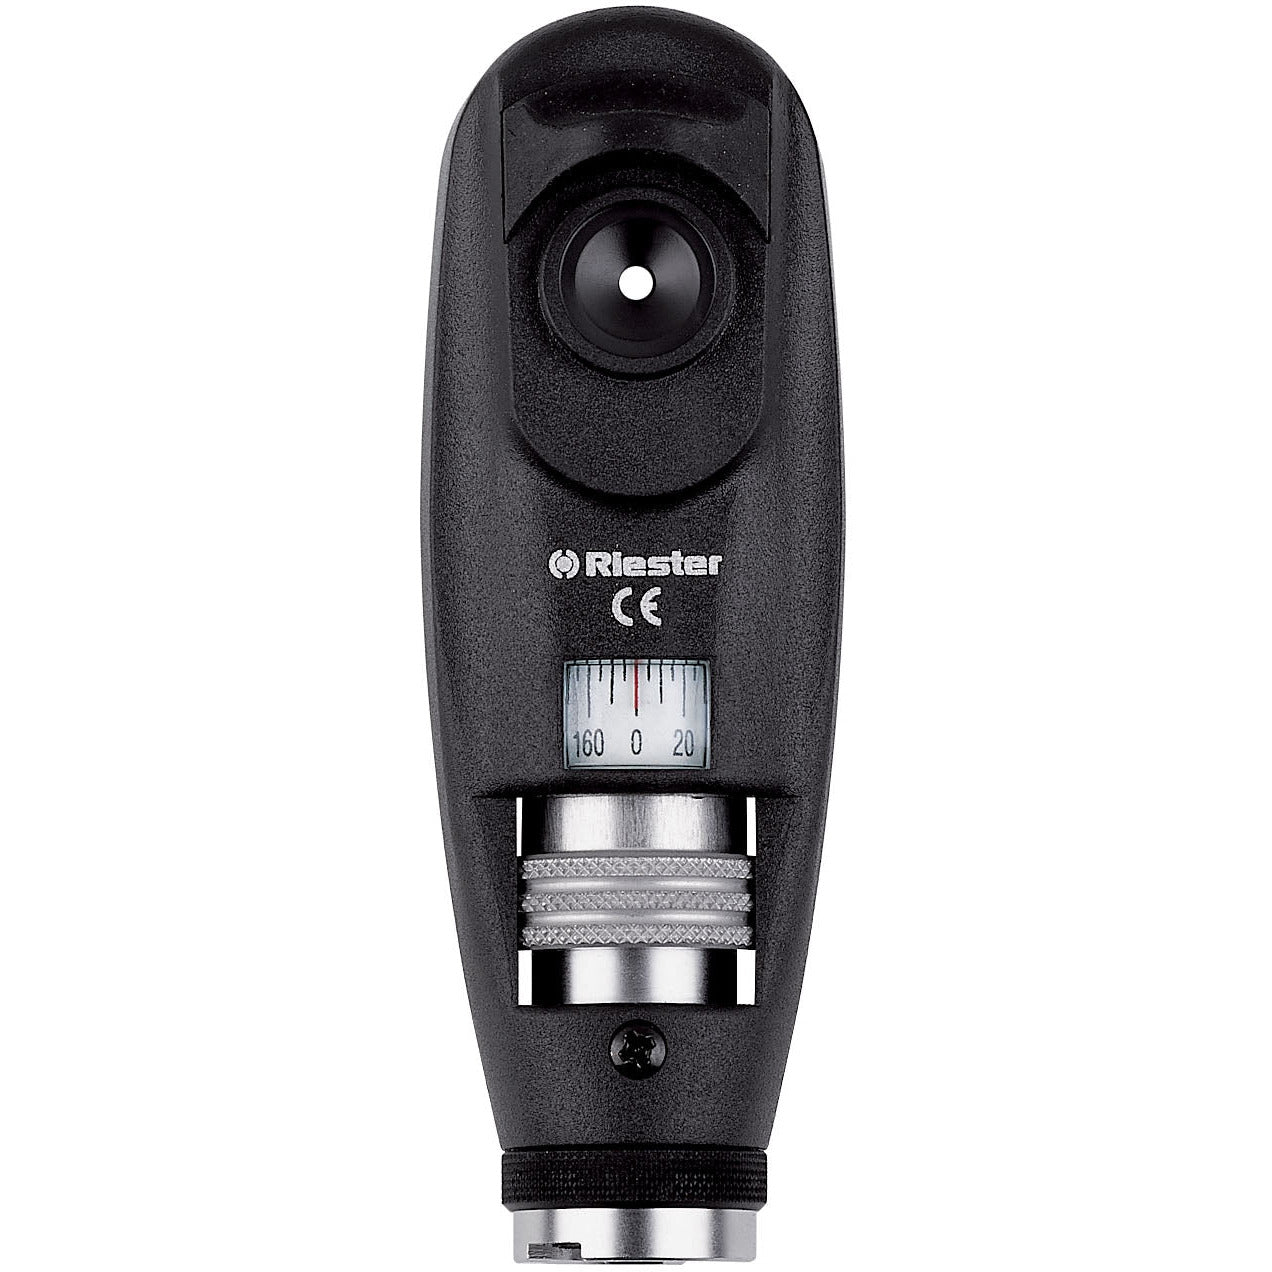 Riester Ri-Scope Retinoscope Head Slit XL 3.5v - Replacement Head